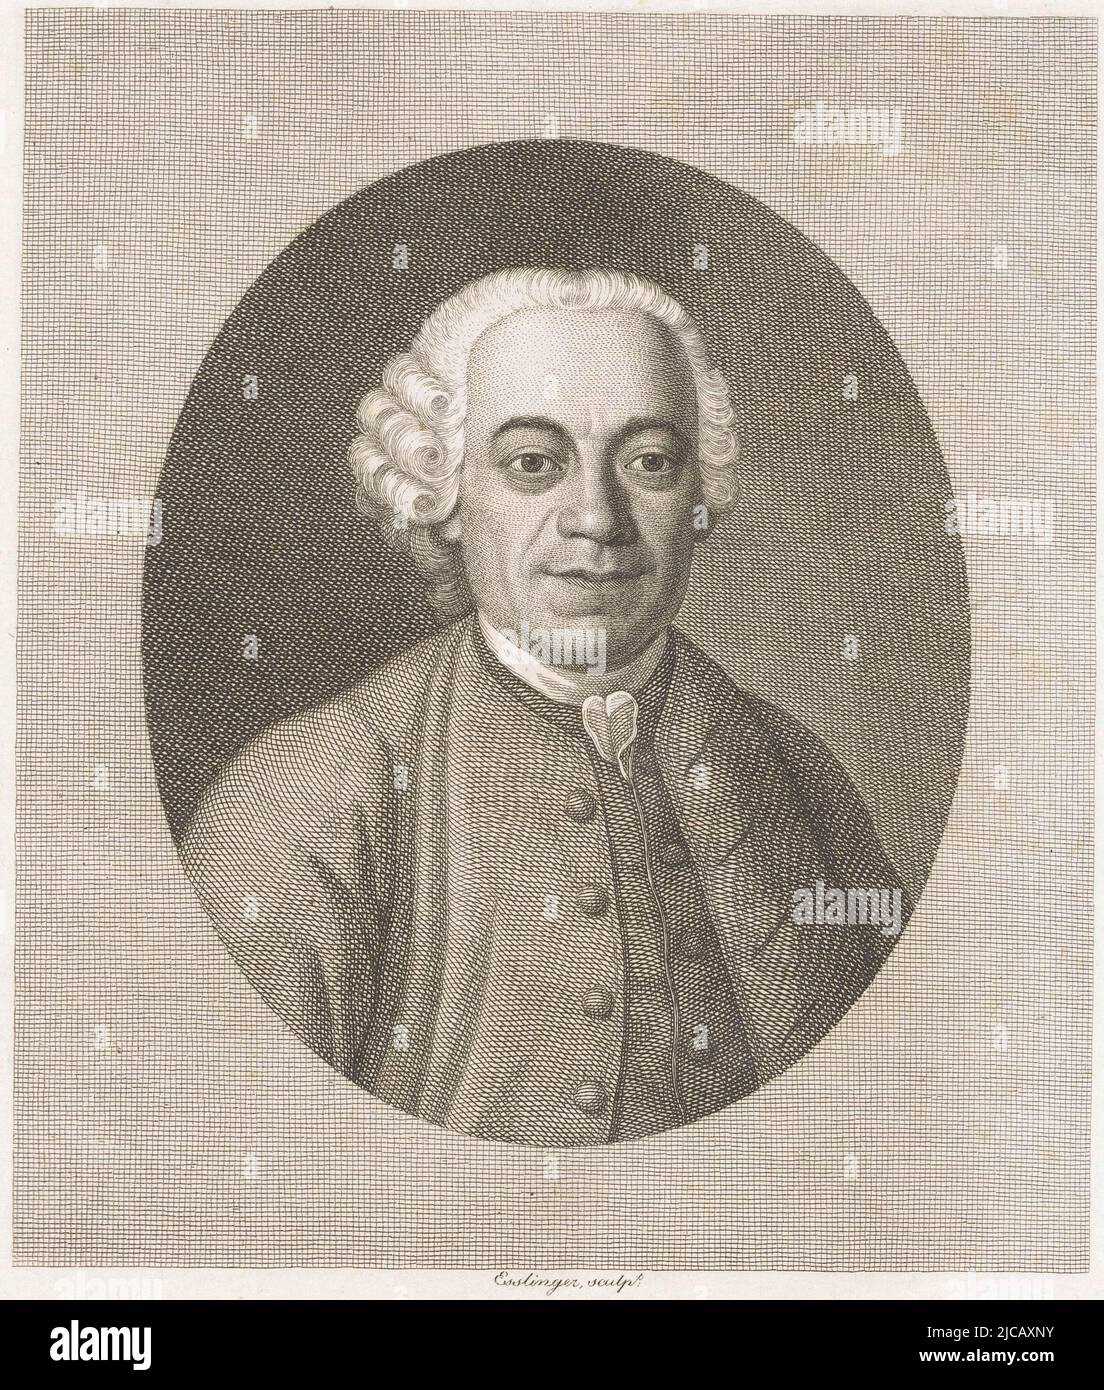 Portrait of Salomon Hirzel, print maker: Martin Esslinger, (mentioned on object), 1818 - 1841, paper, steel engraving, h 160 mm × w 125 mm Stock Photo